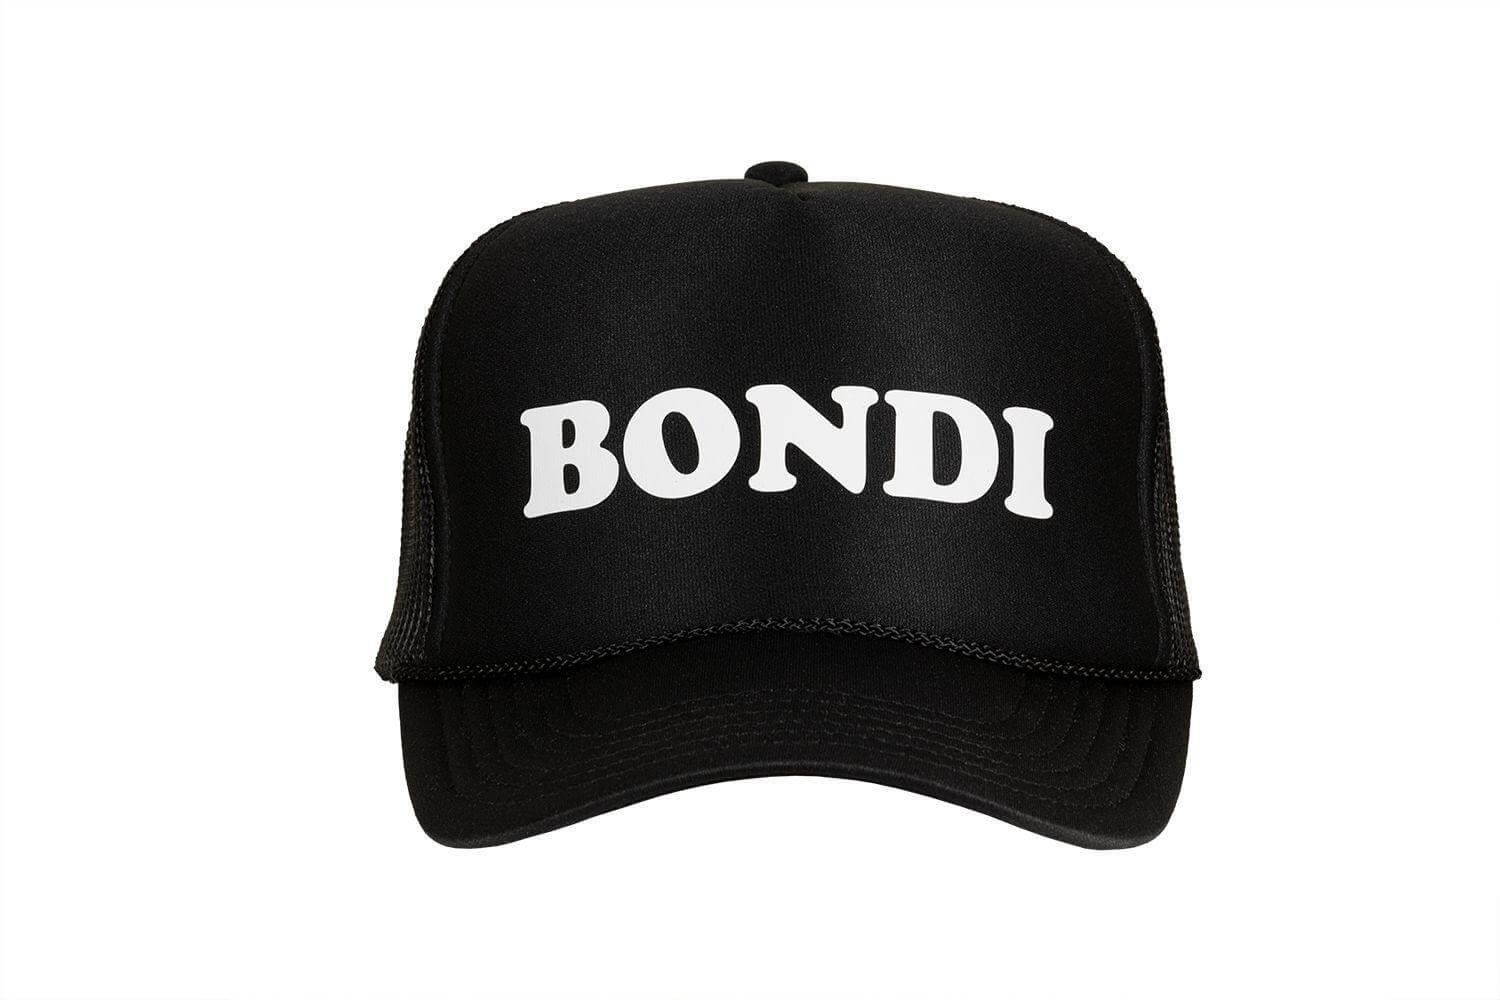 Bondi Beach high crown trucker cap with mesh back and snapback  - Tropic Trucker Australia®